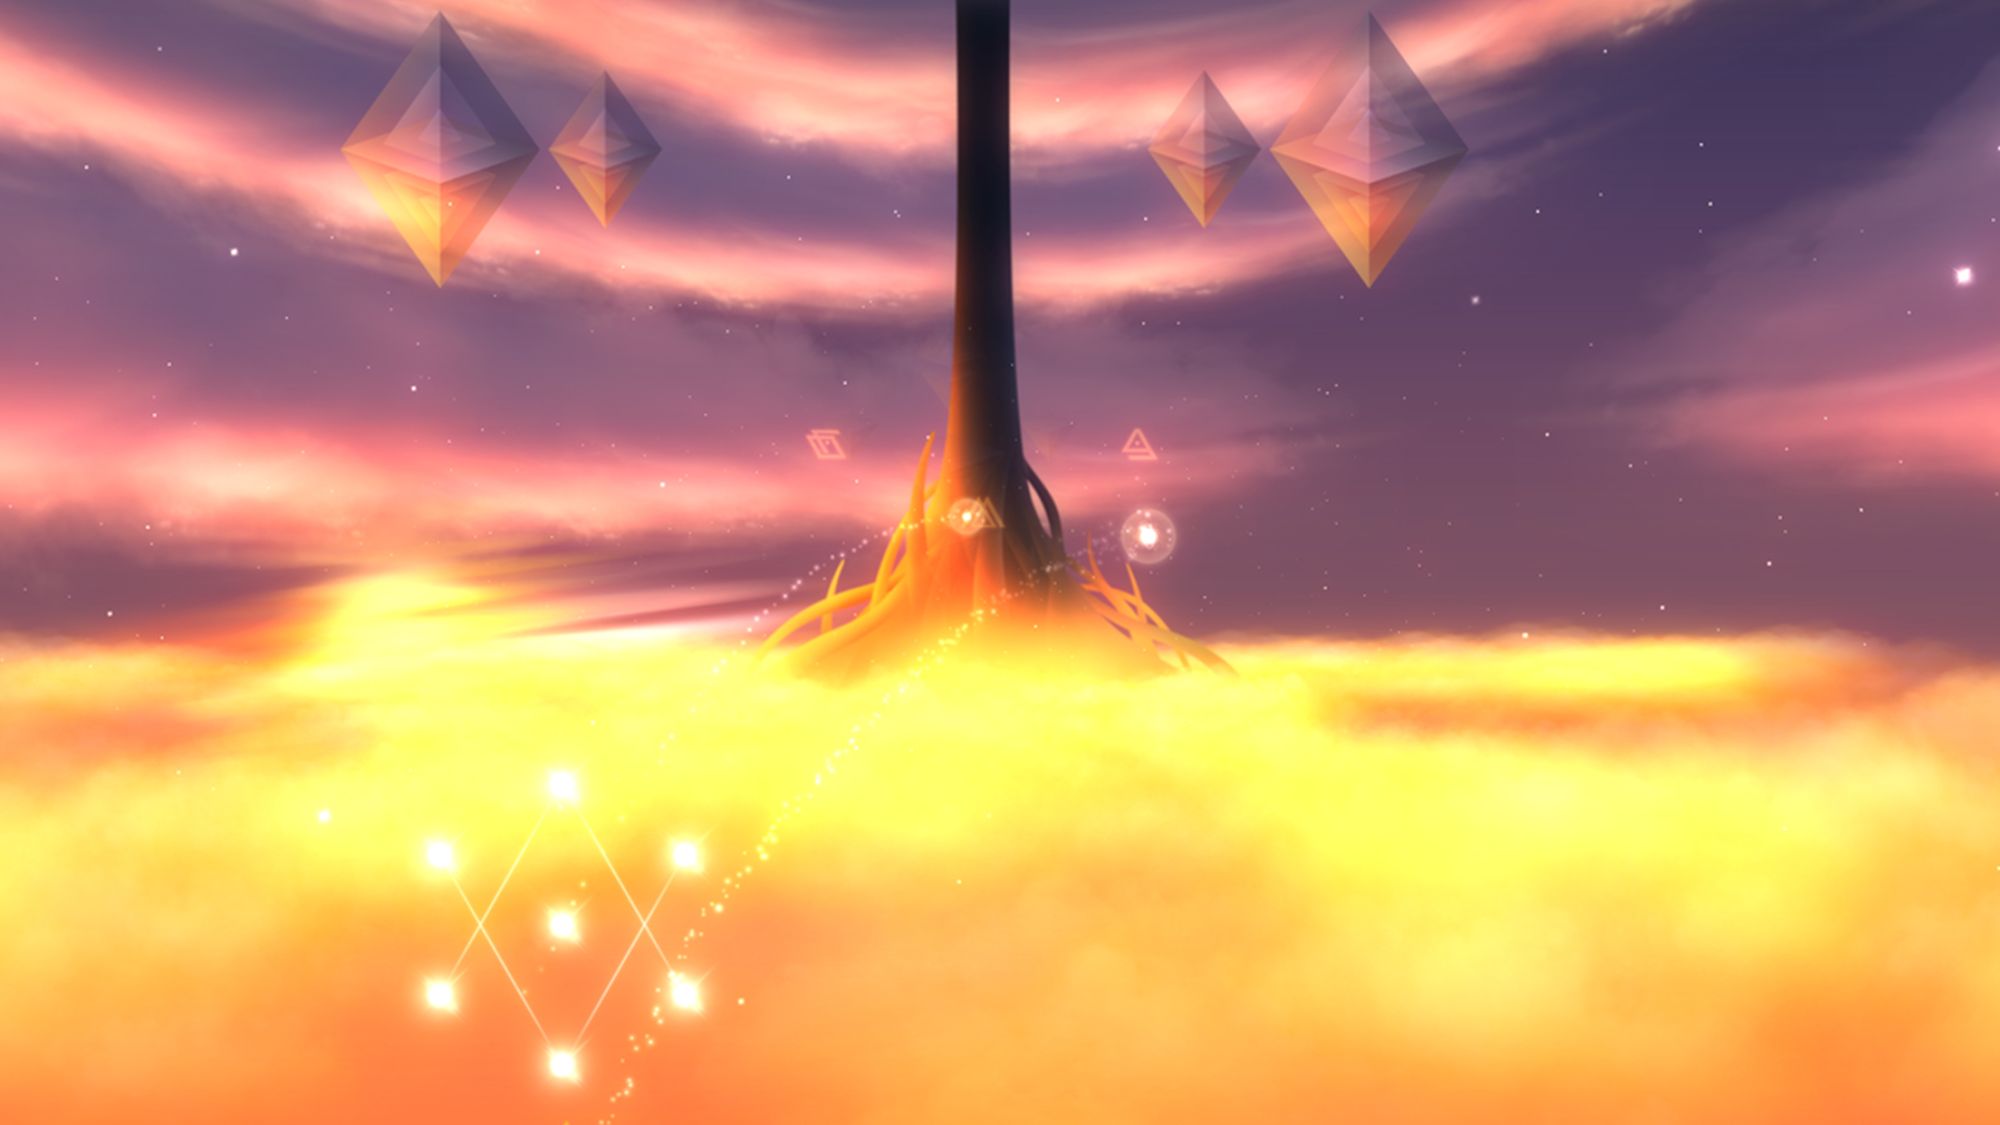 Gemini - Android game screenshots.